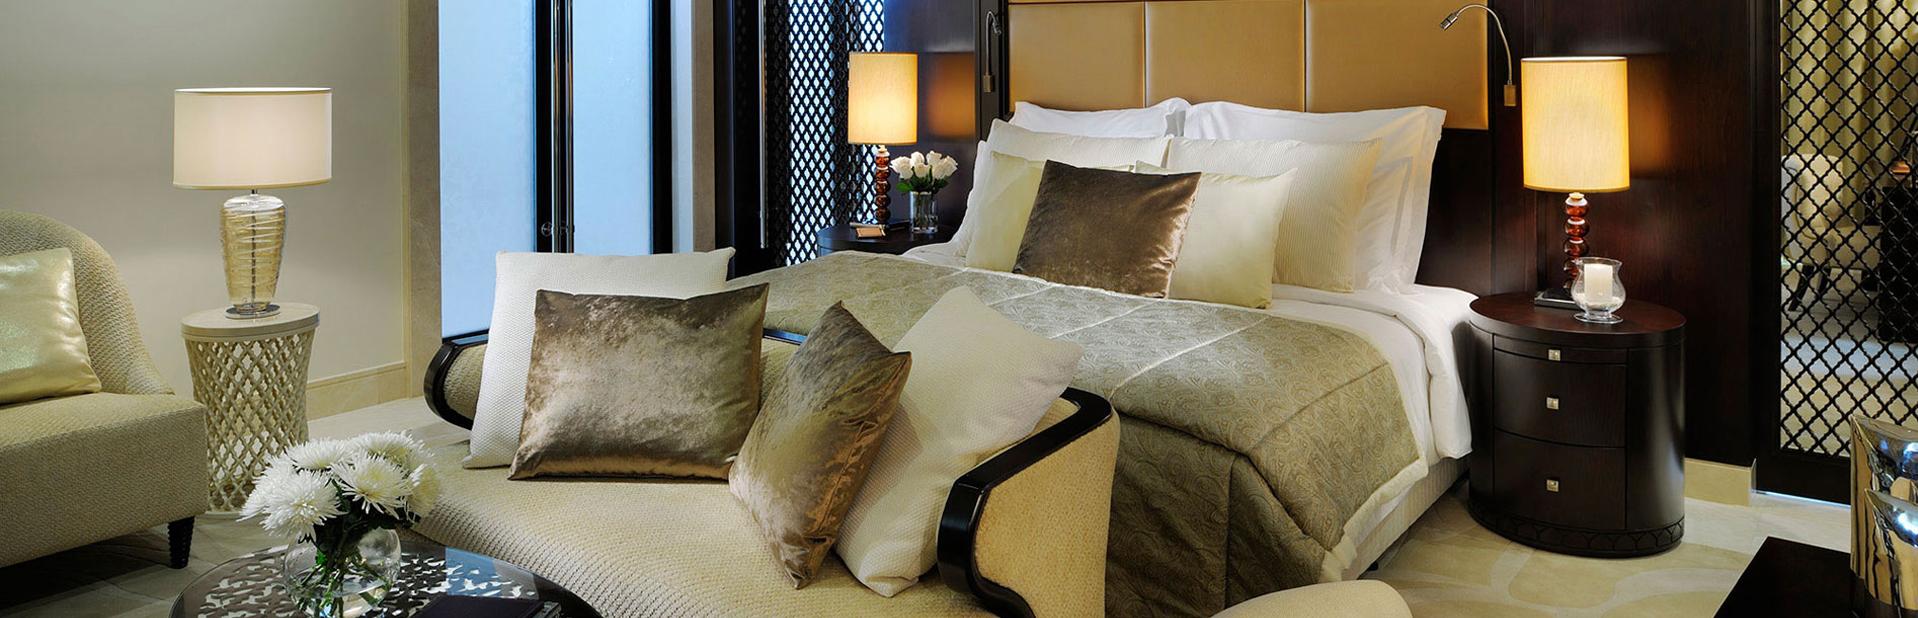 Отель One & Only The Palm Dubai в Дубай, ОАЭ